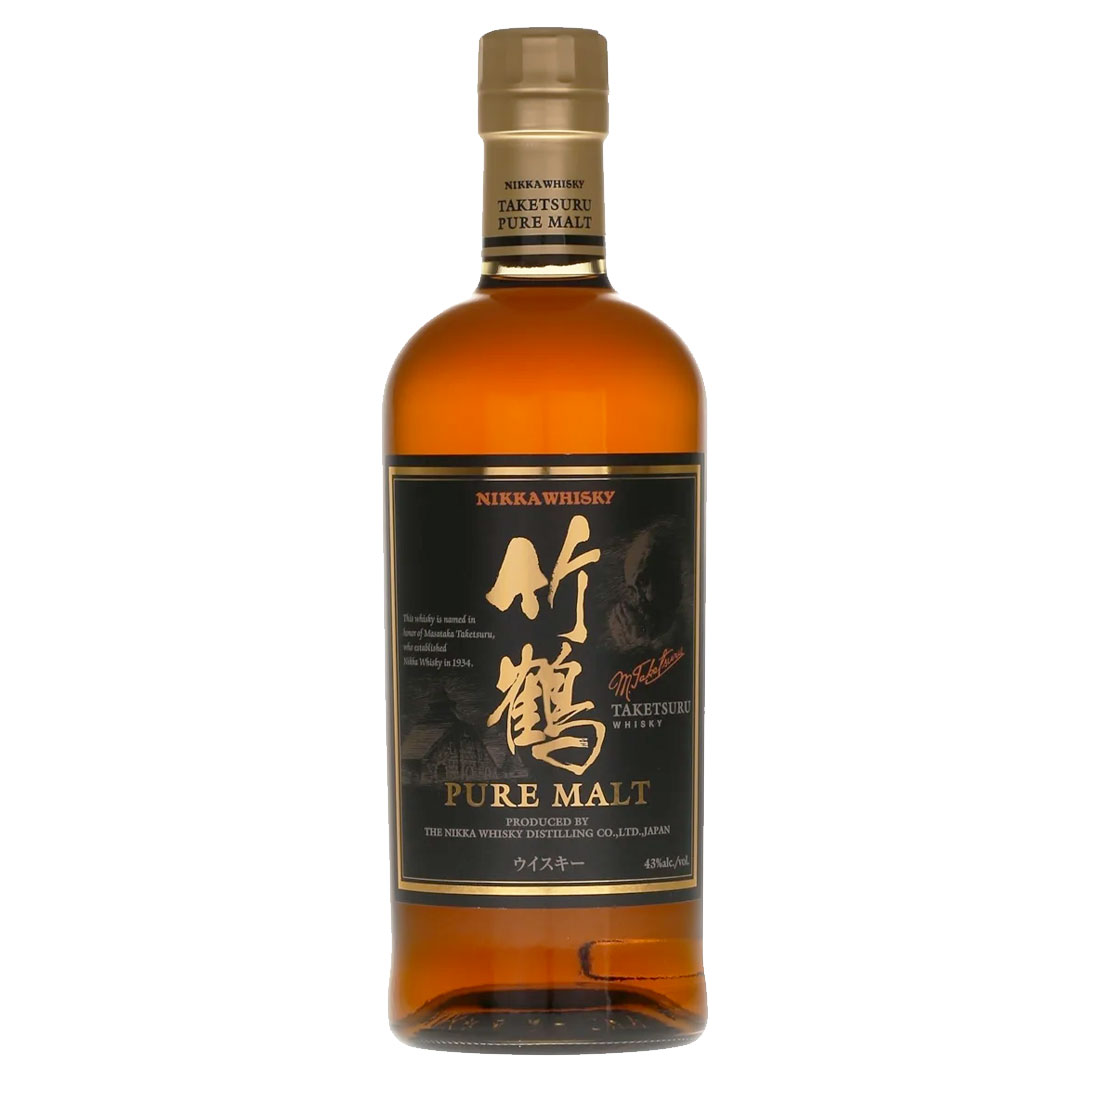 LB_Bottle-Nikka-Whisky-Taketsuru-Pure-Malt